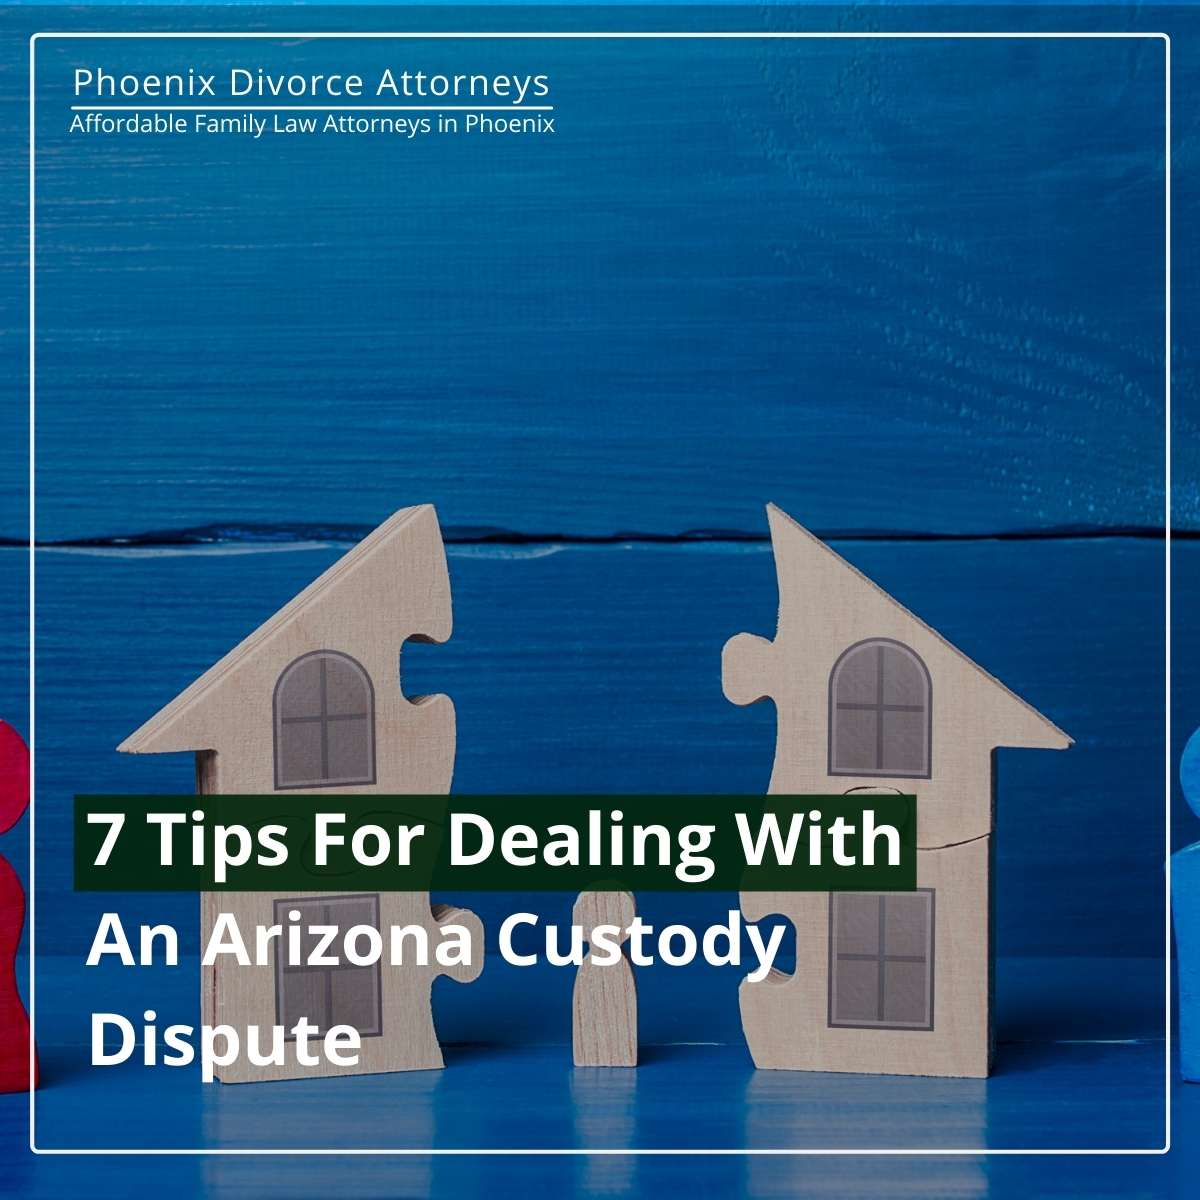 7 Tips For Dealing With An Arizona Custody Dispute